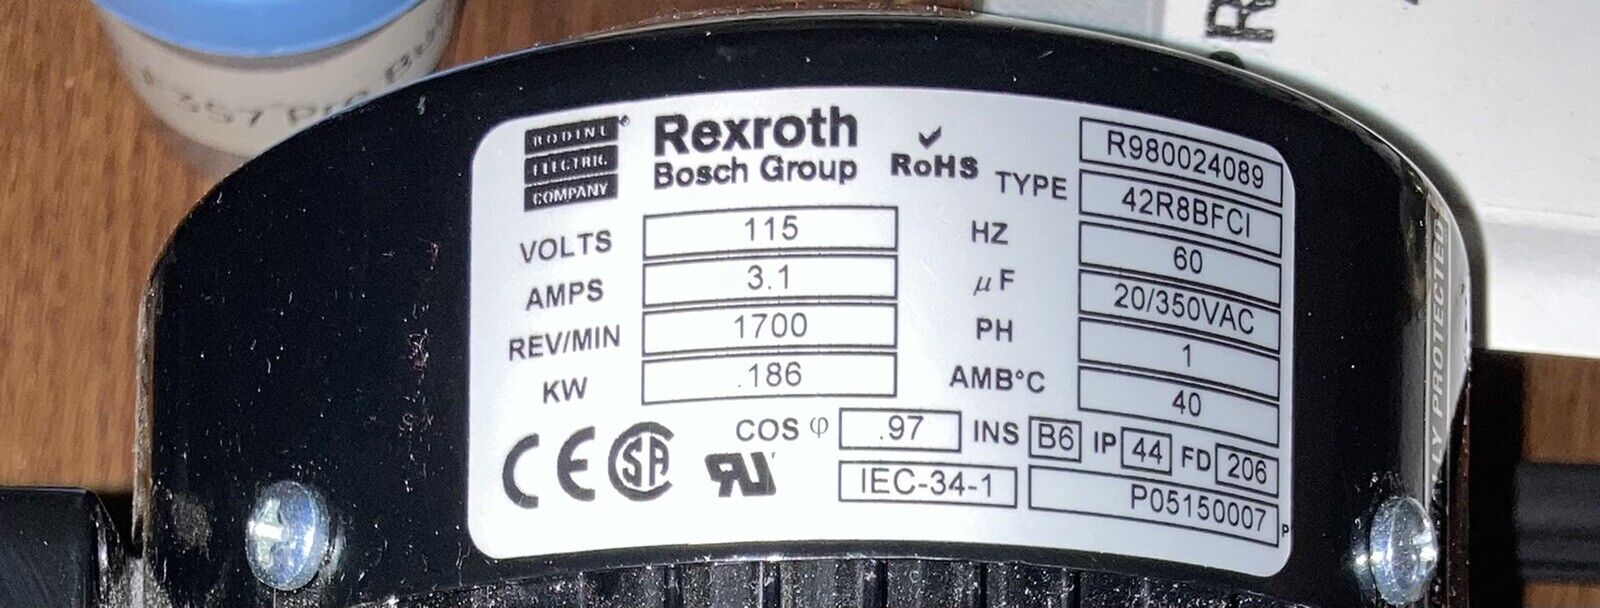 REXROTH  R980024089  115V 1 HP SING PHASE,  TYPE 42R8BFCI